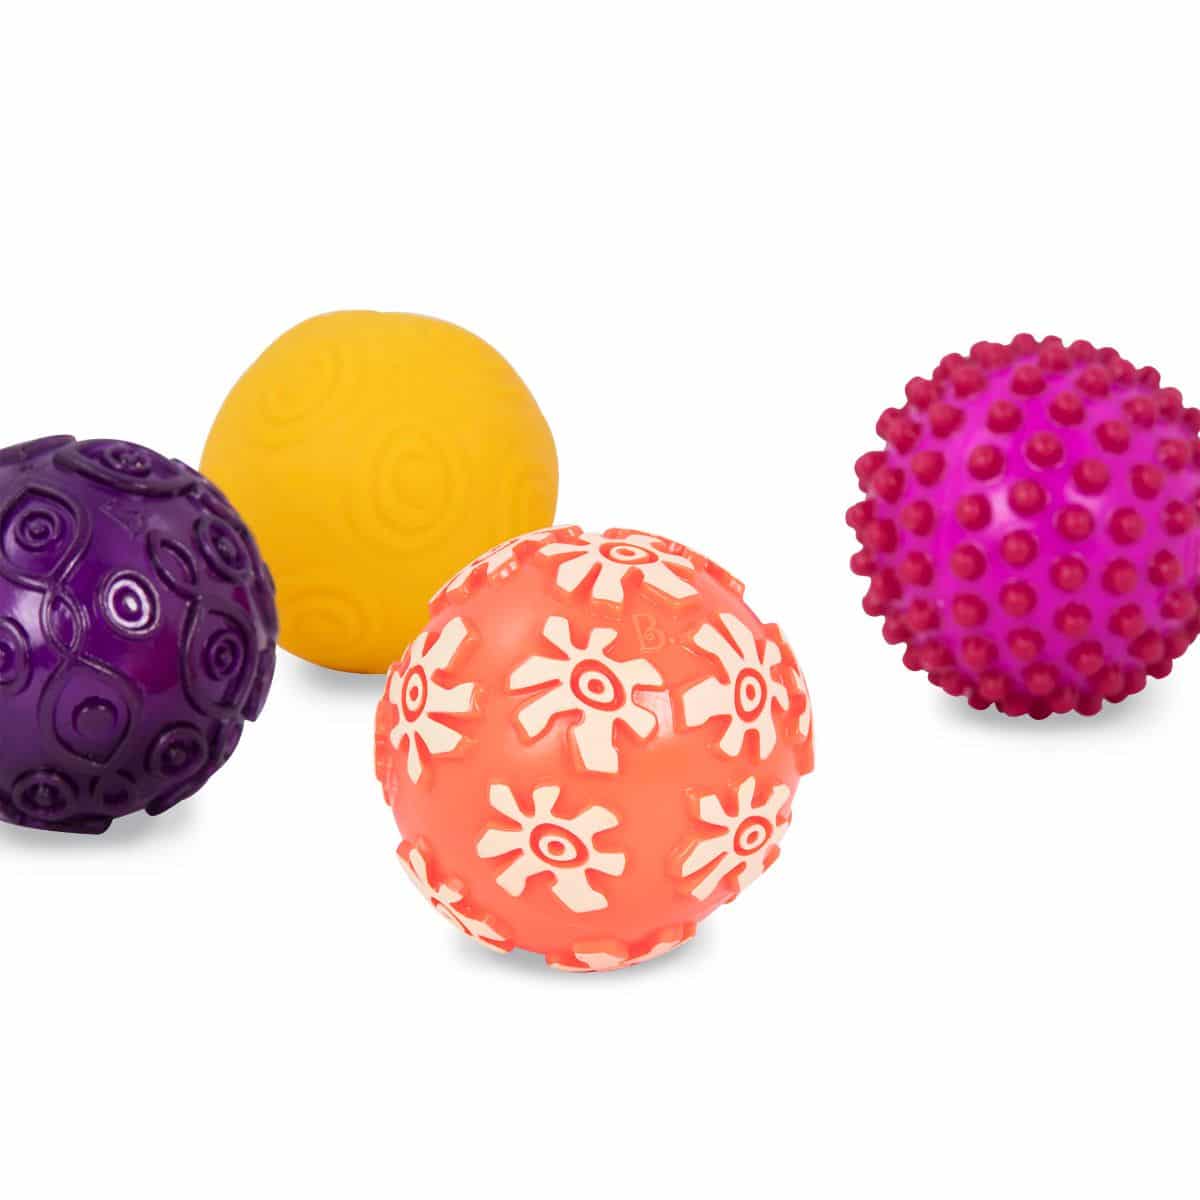 Sensory toy balls